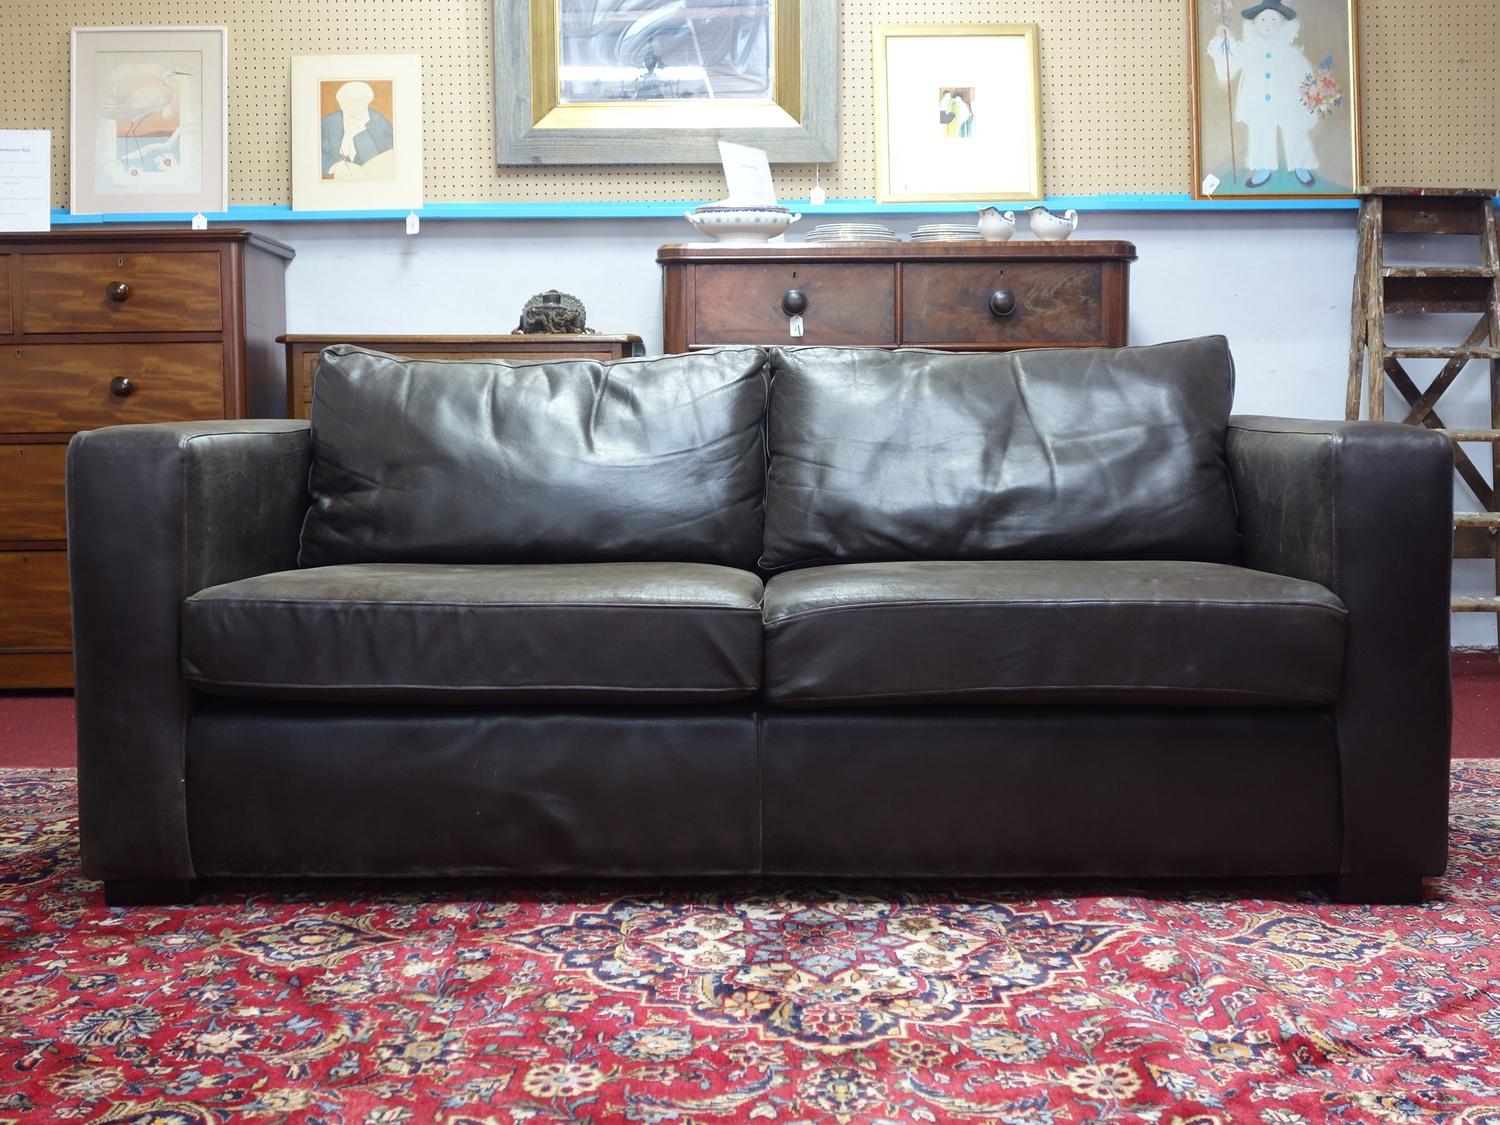 A contemporary leather sofa